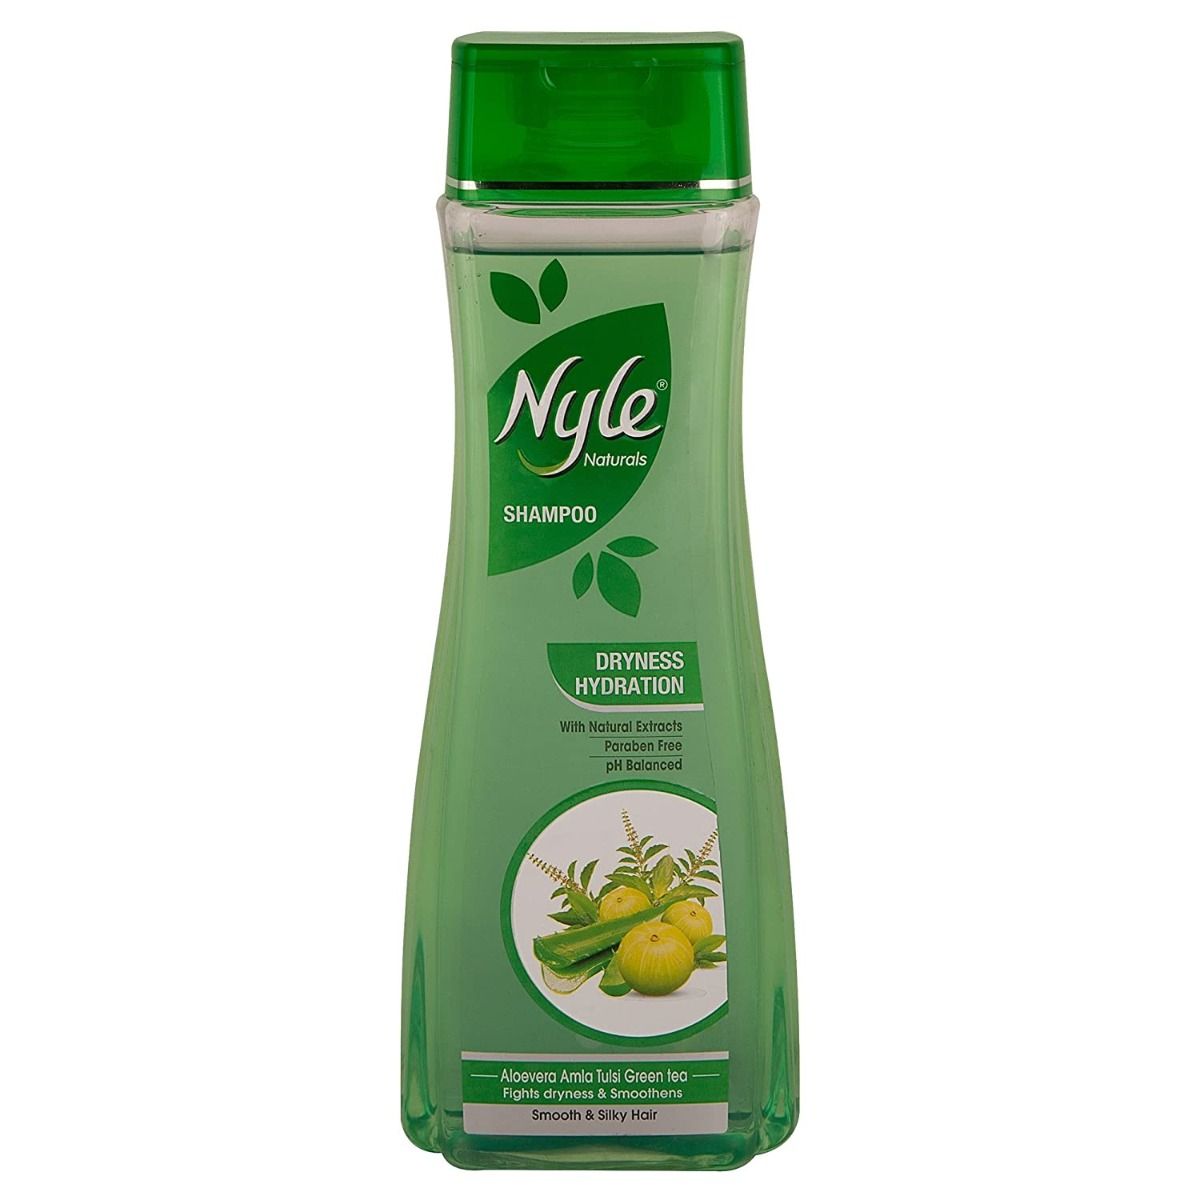 Buy Nyle Dryness Hydration Shampoo, 400 ml Online